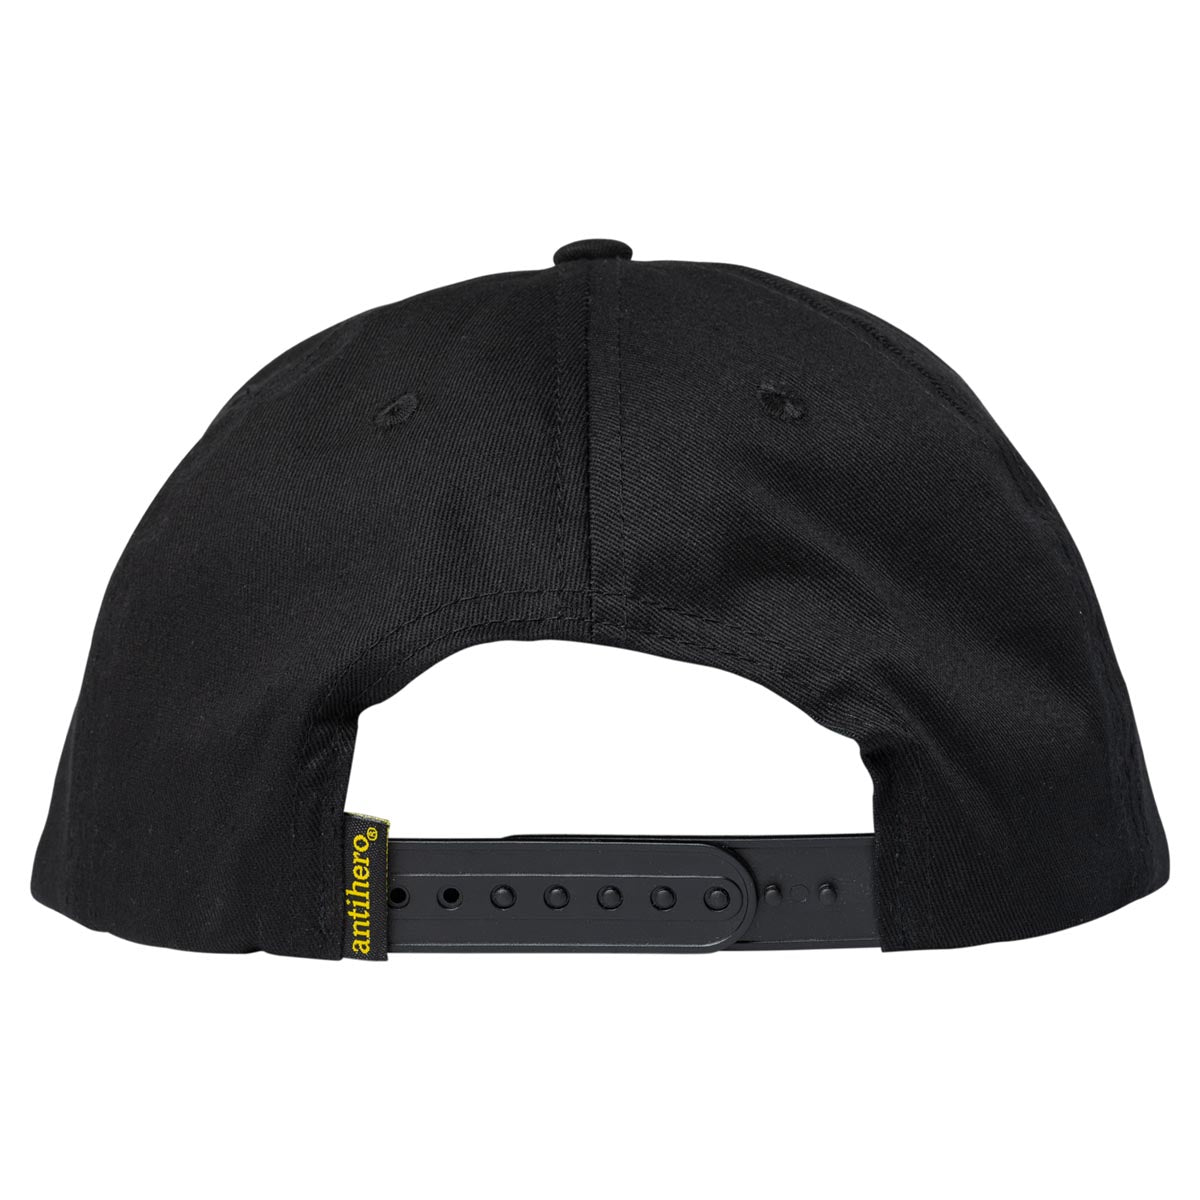 Anti-Hero Slingshot Hat - Black image 2